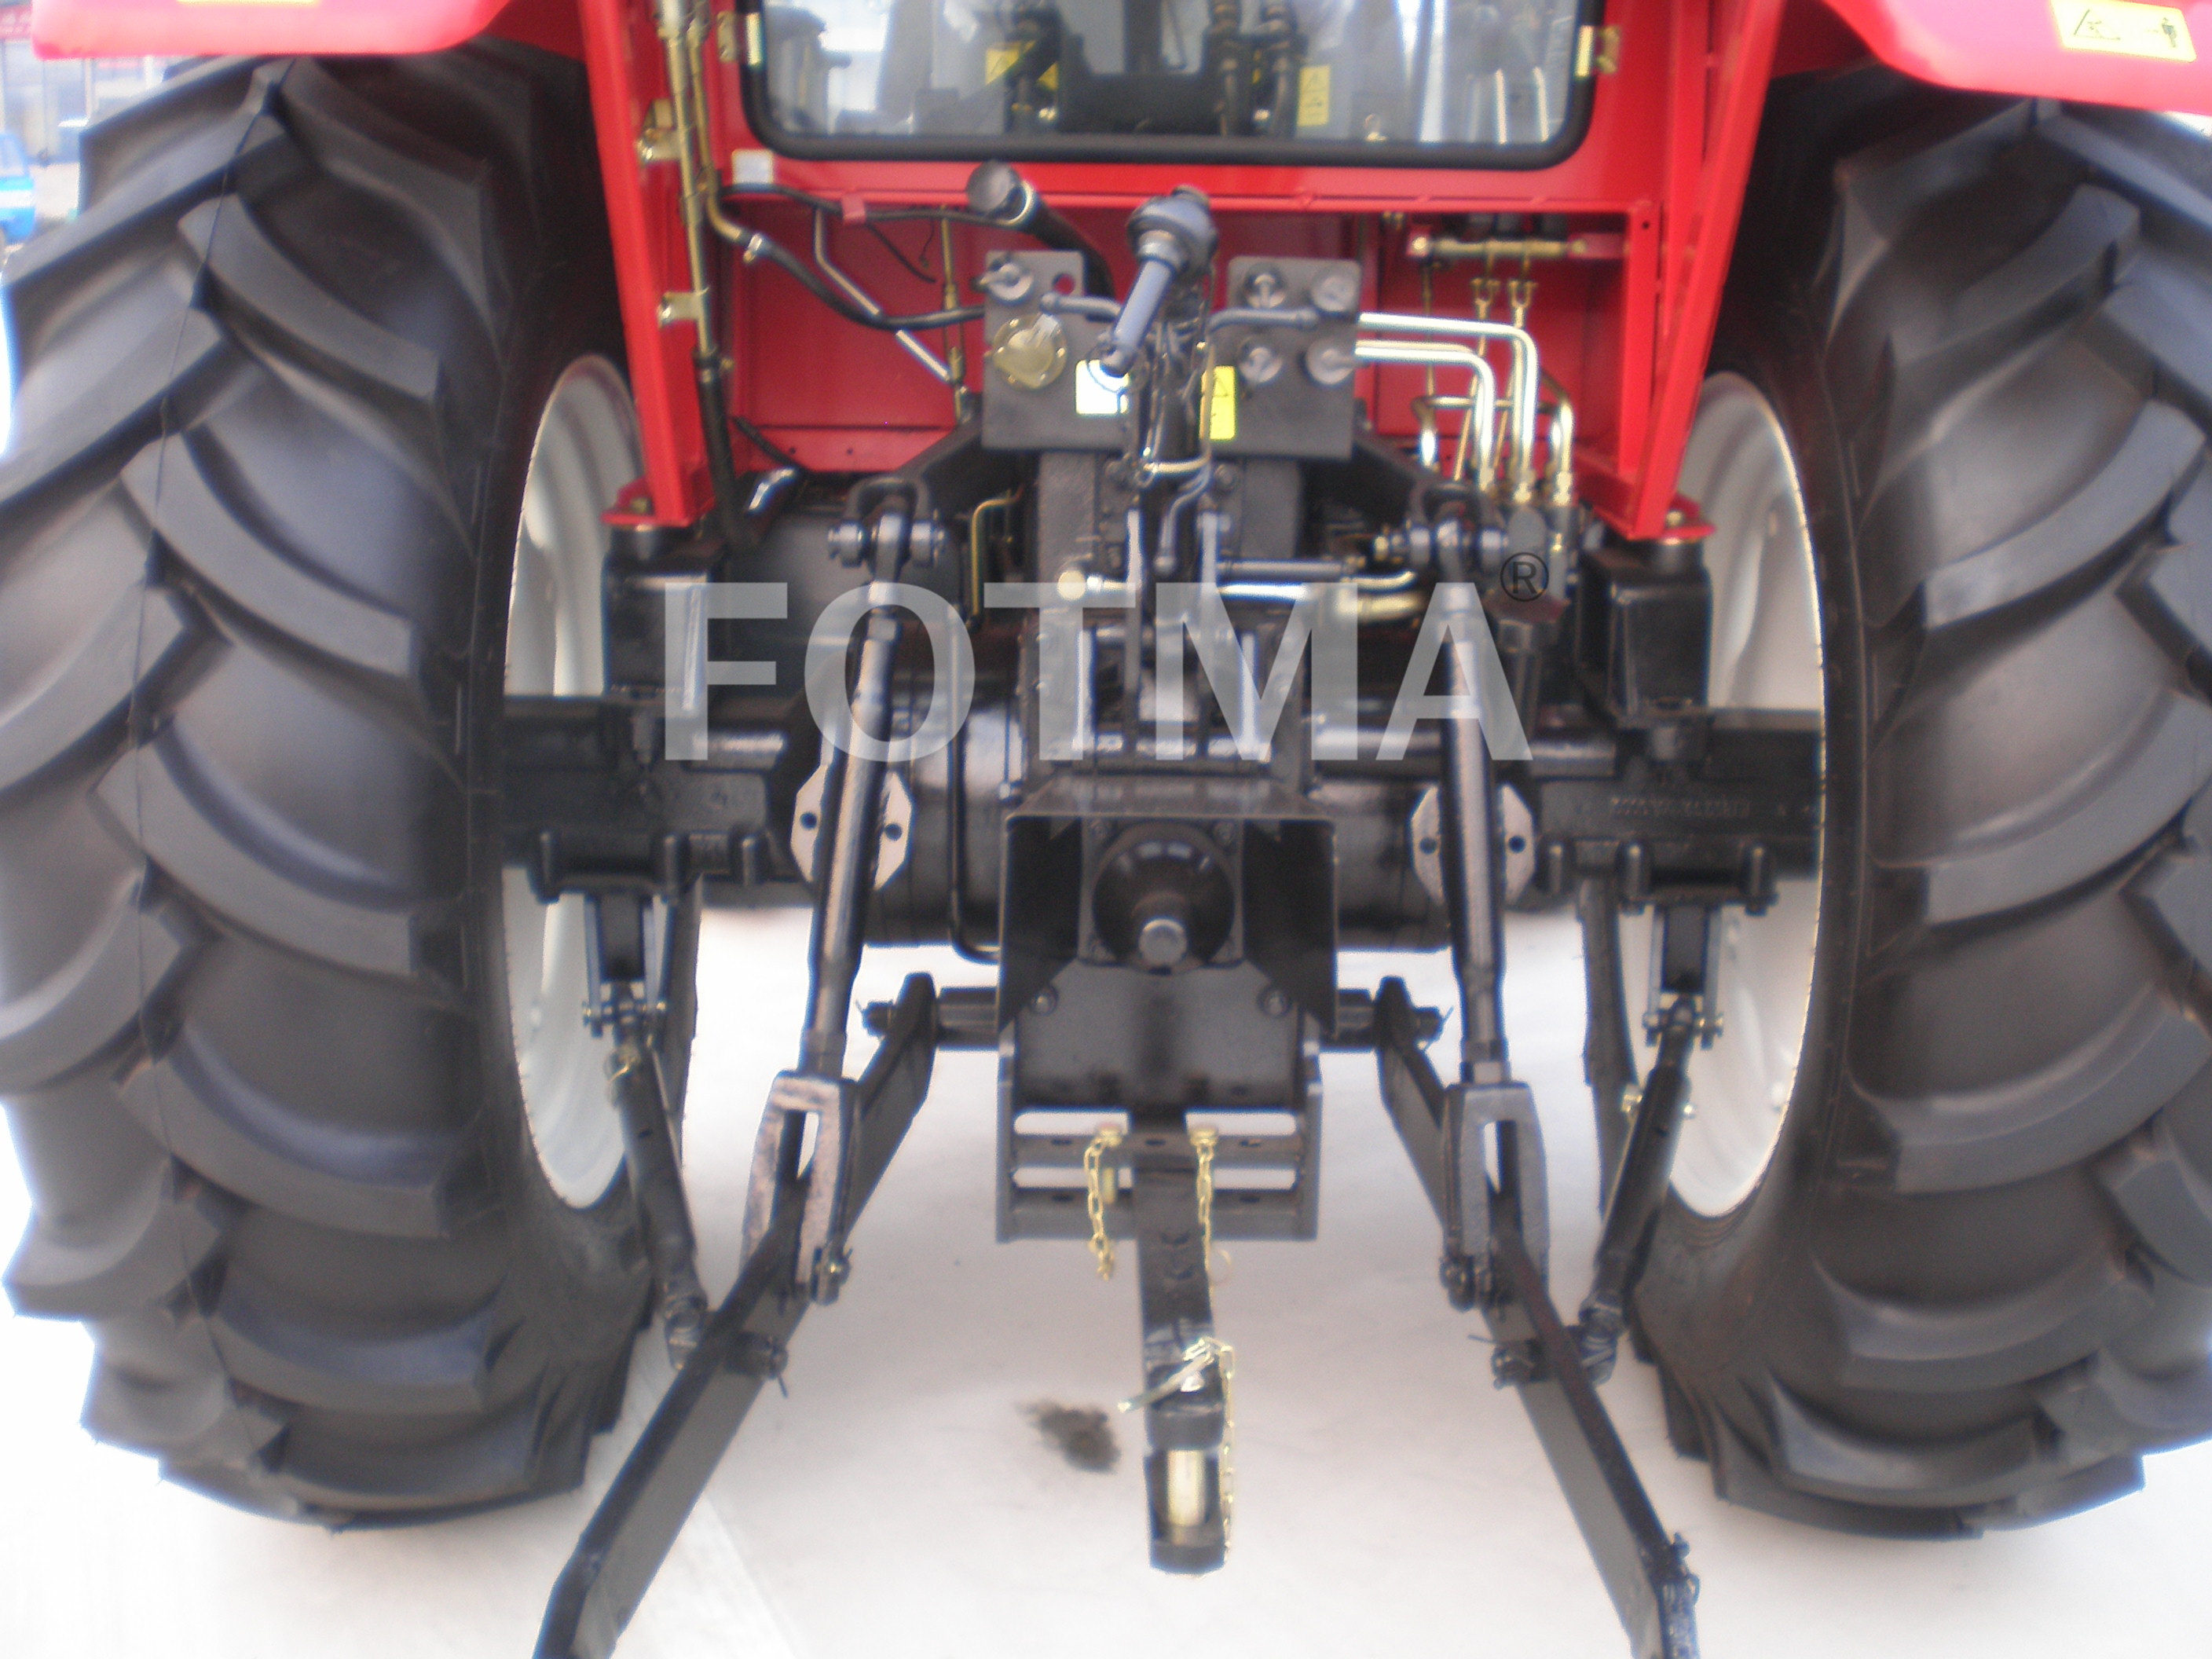 Foton TA654 Tractor